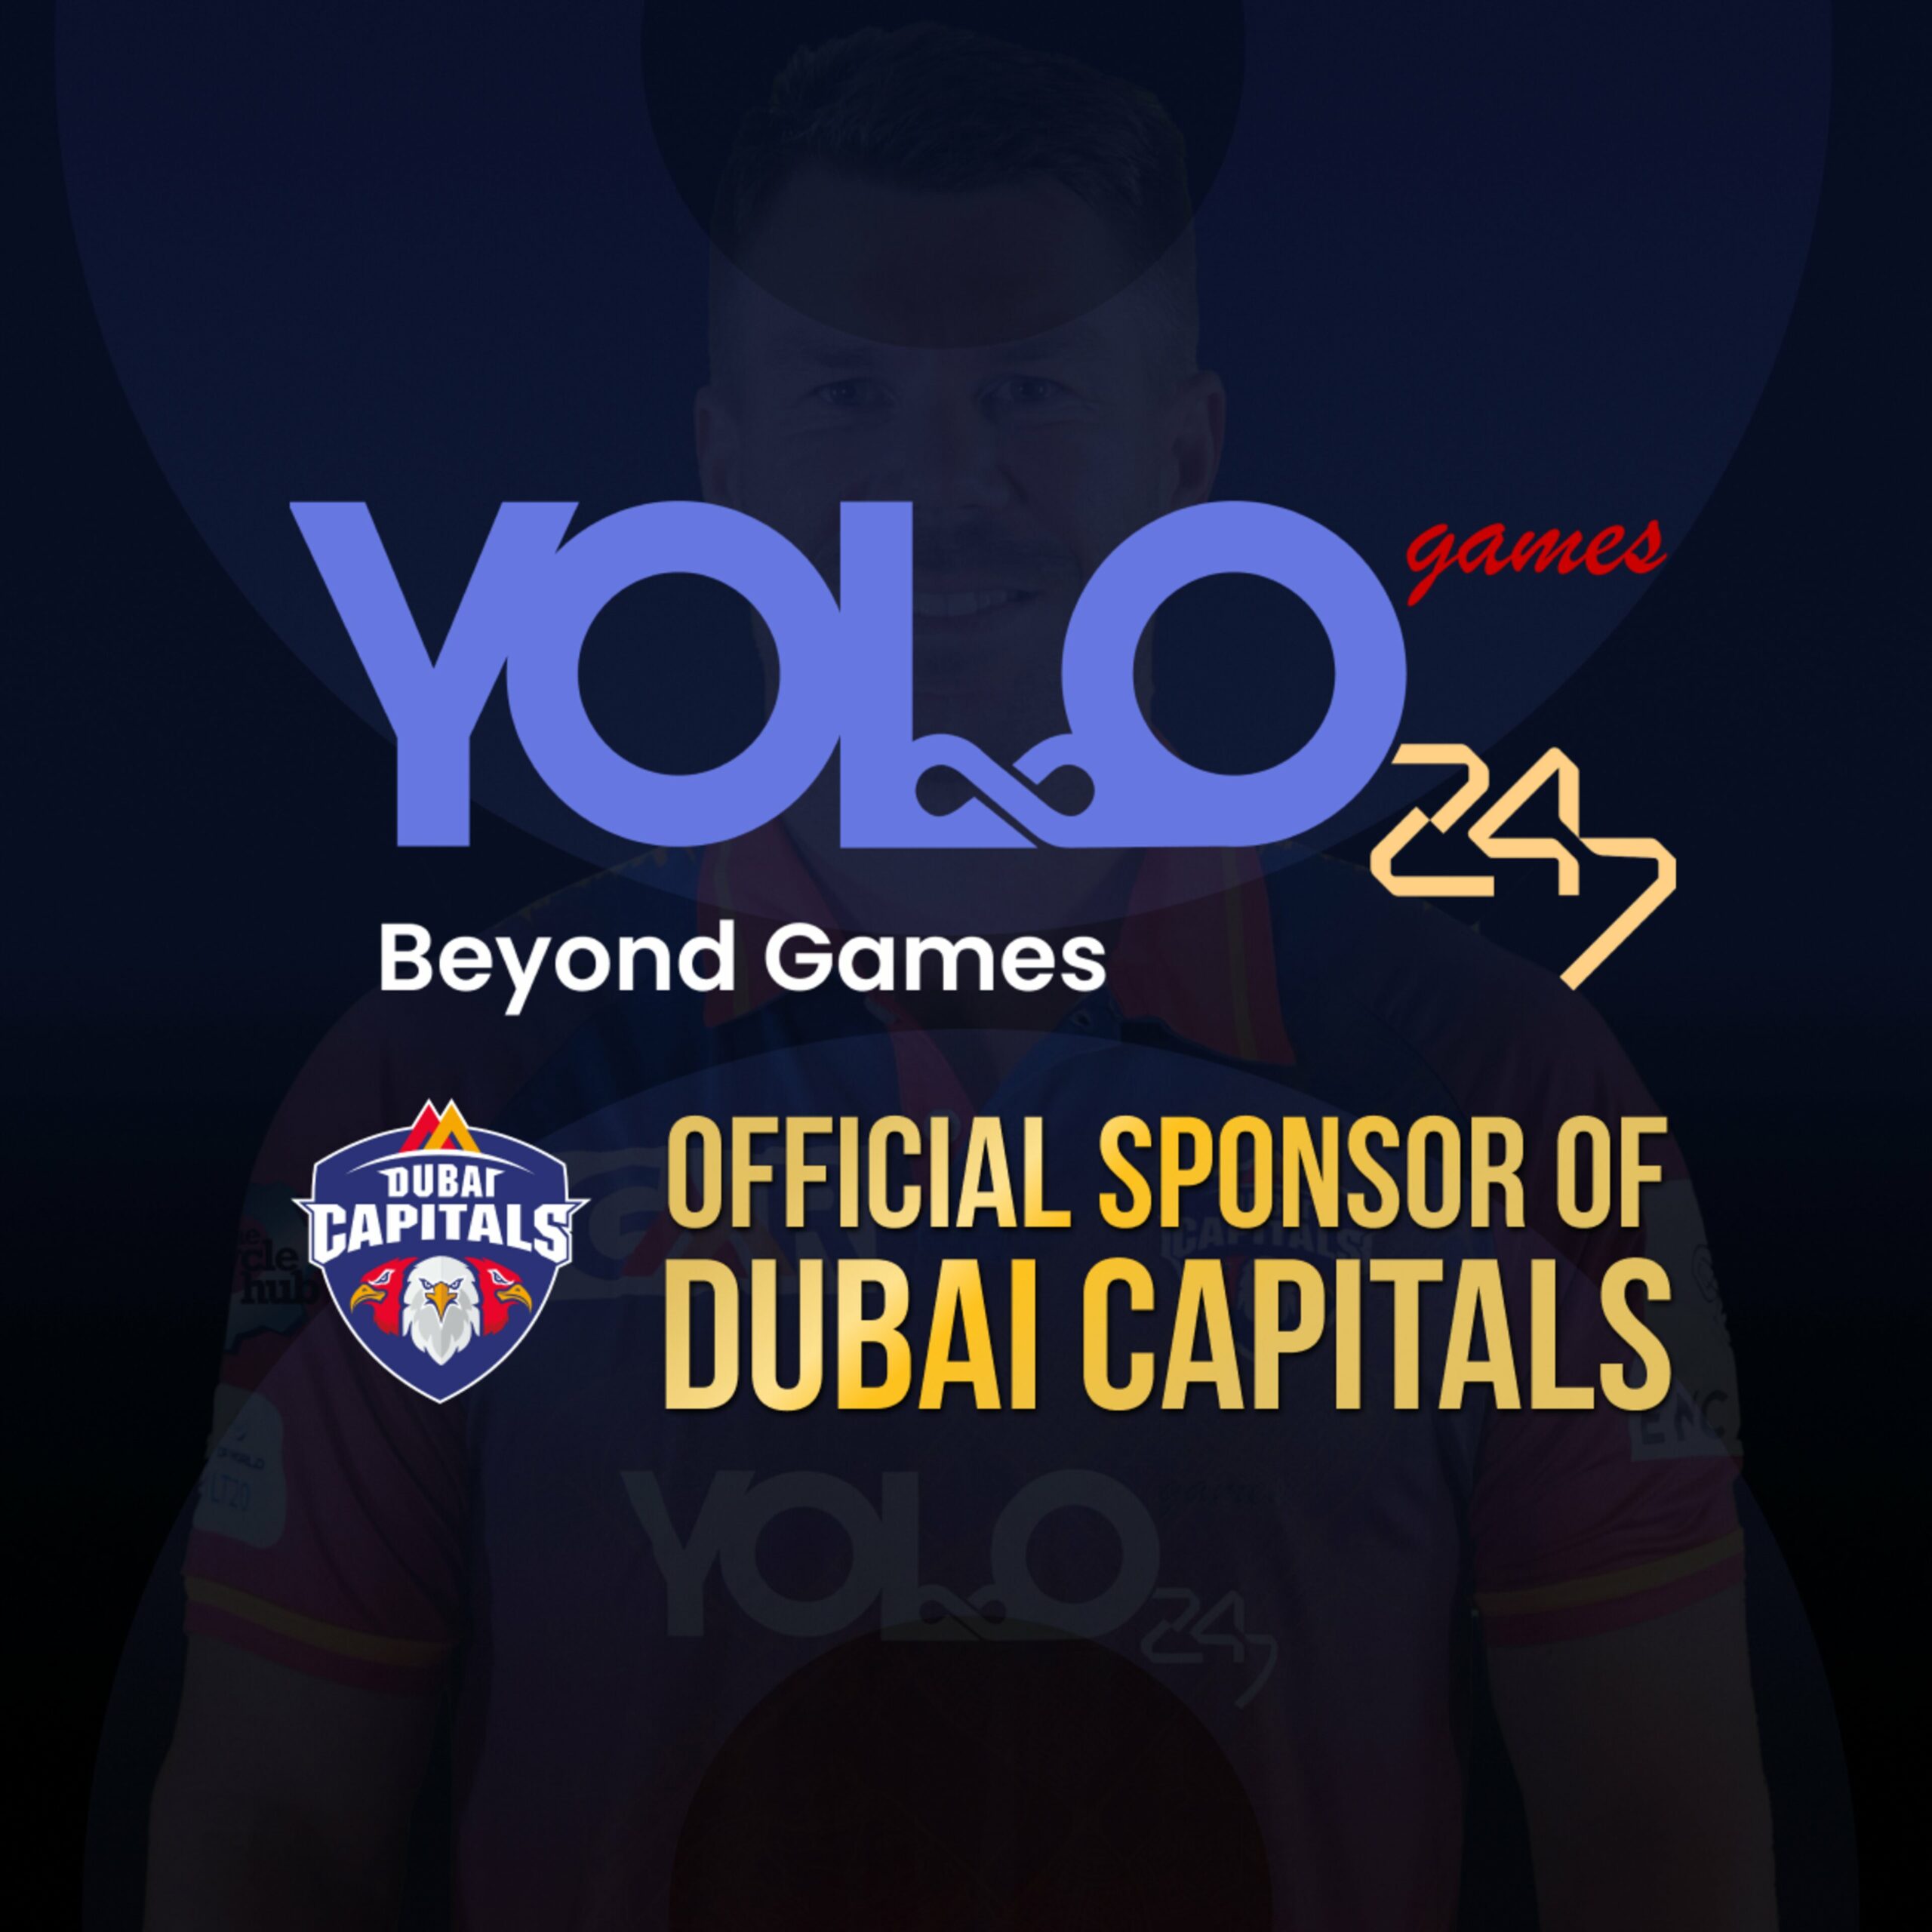 YOLO247 Games is the “Principal Sponsor” for ILT20 Dubai Capitals